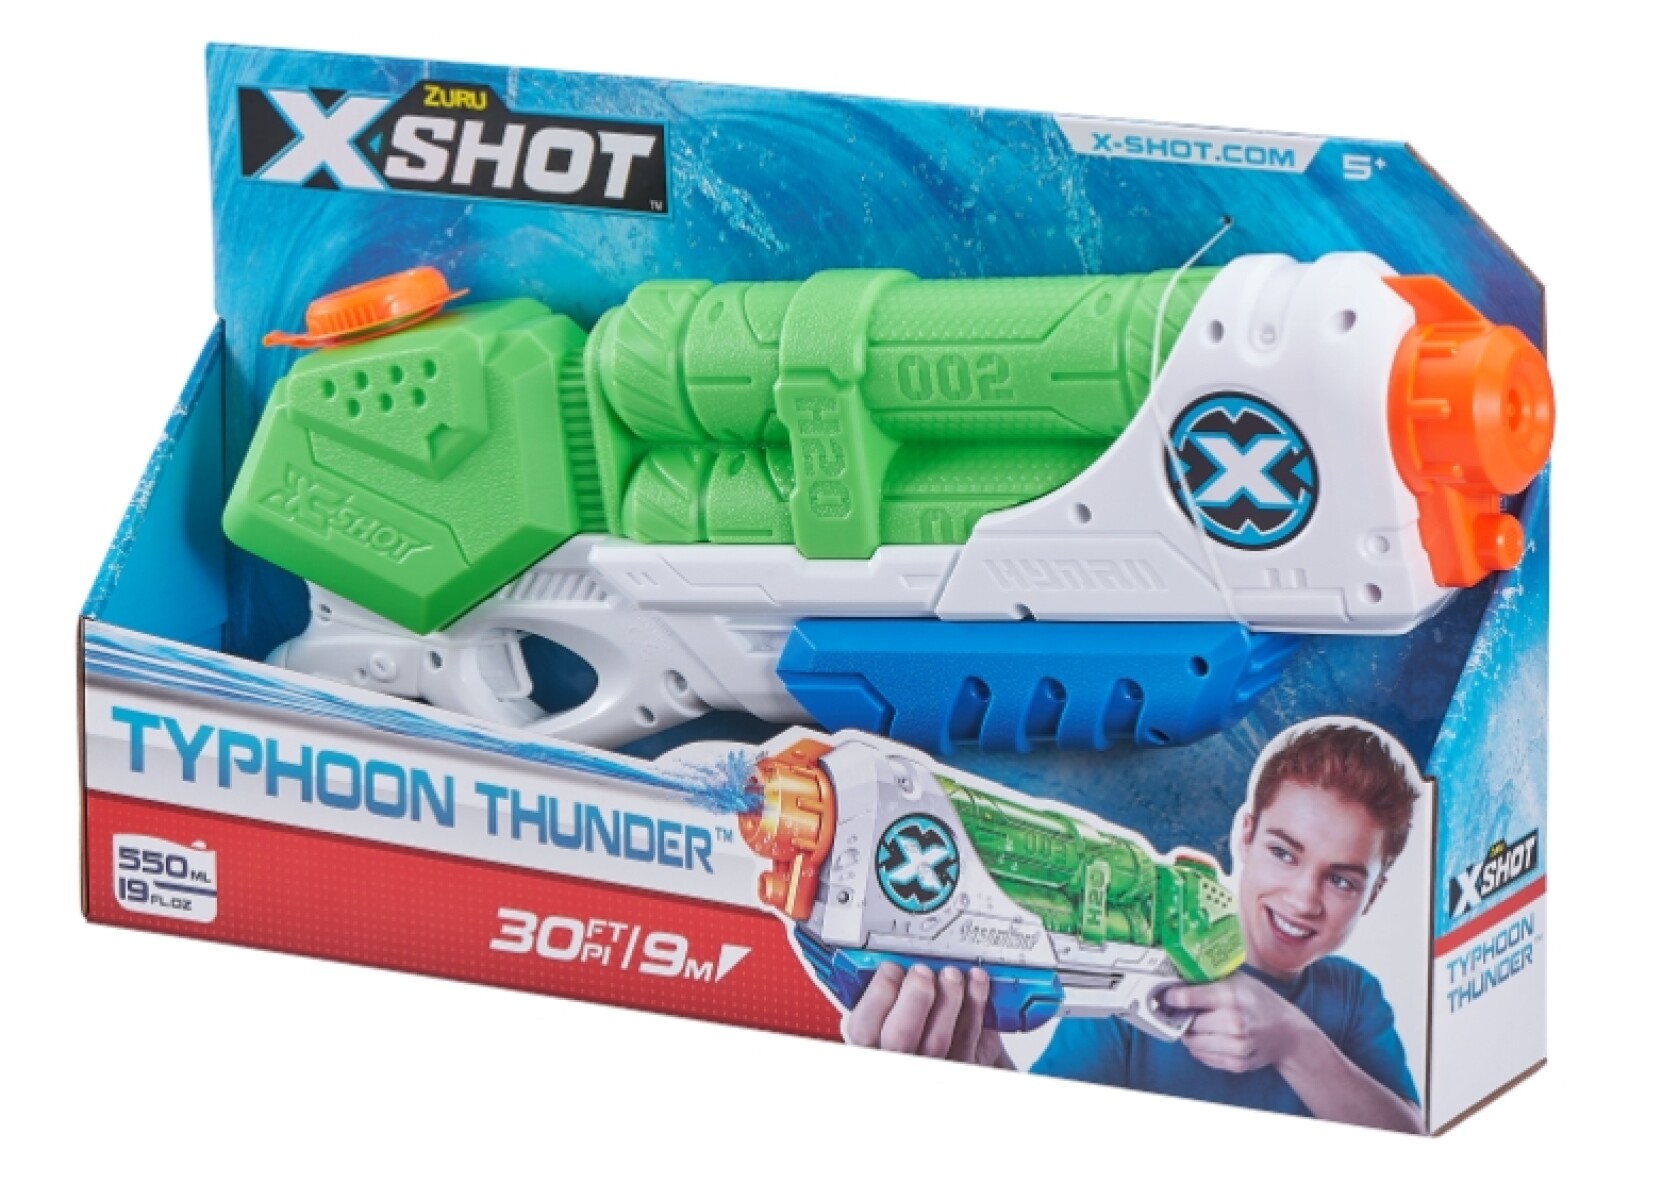 Pistola de Agua X-shot Water Thyphoon Thunder - 001 